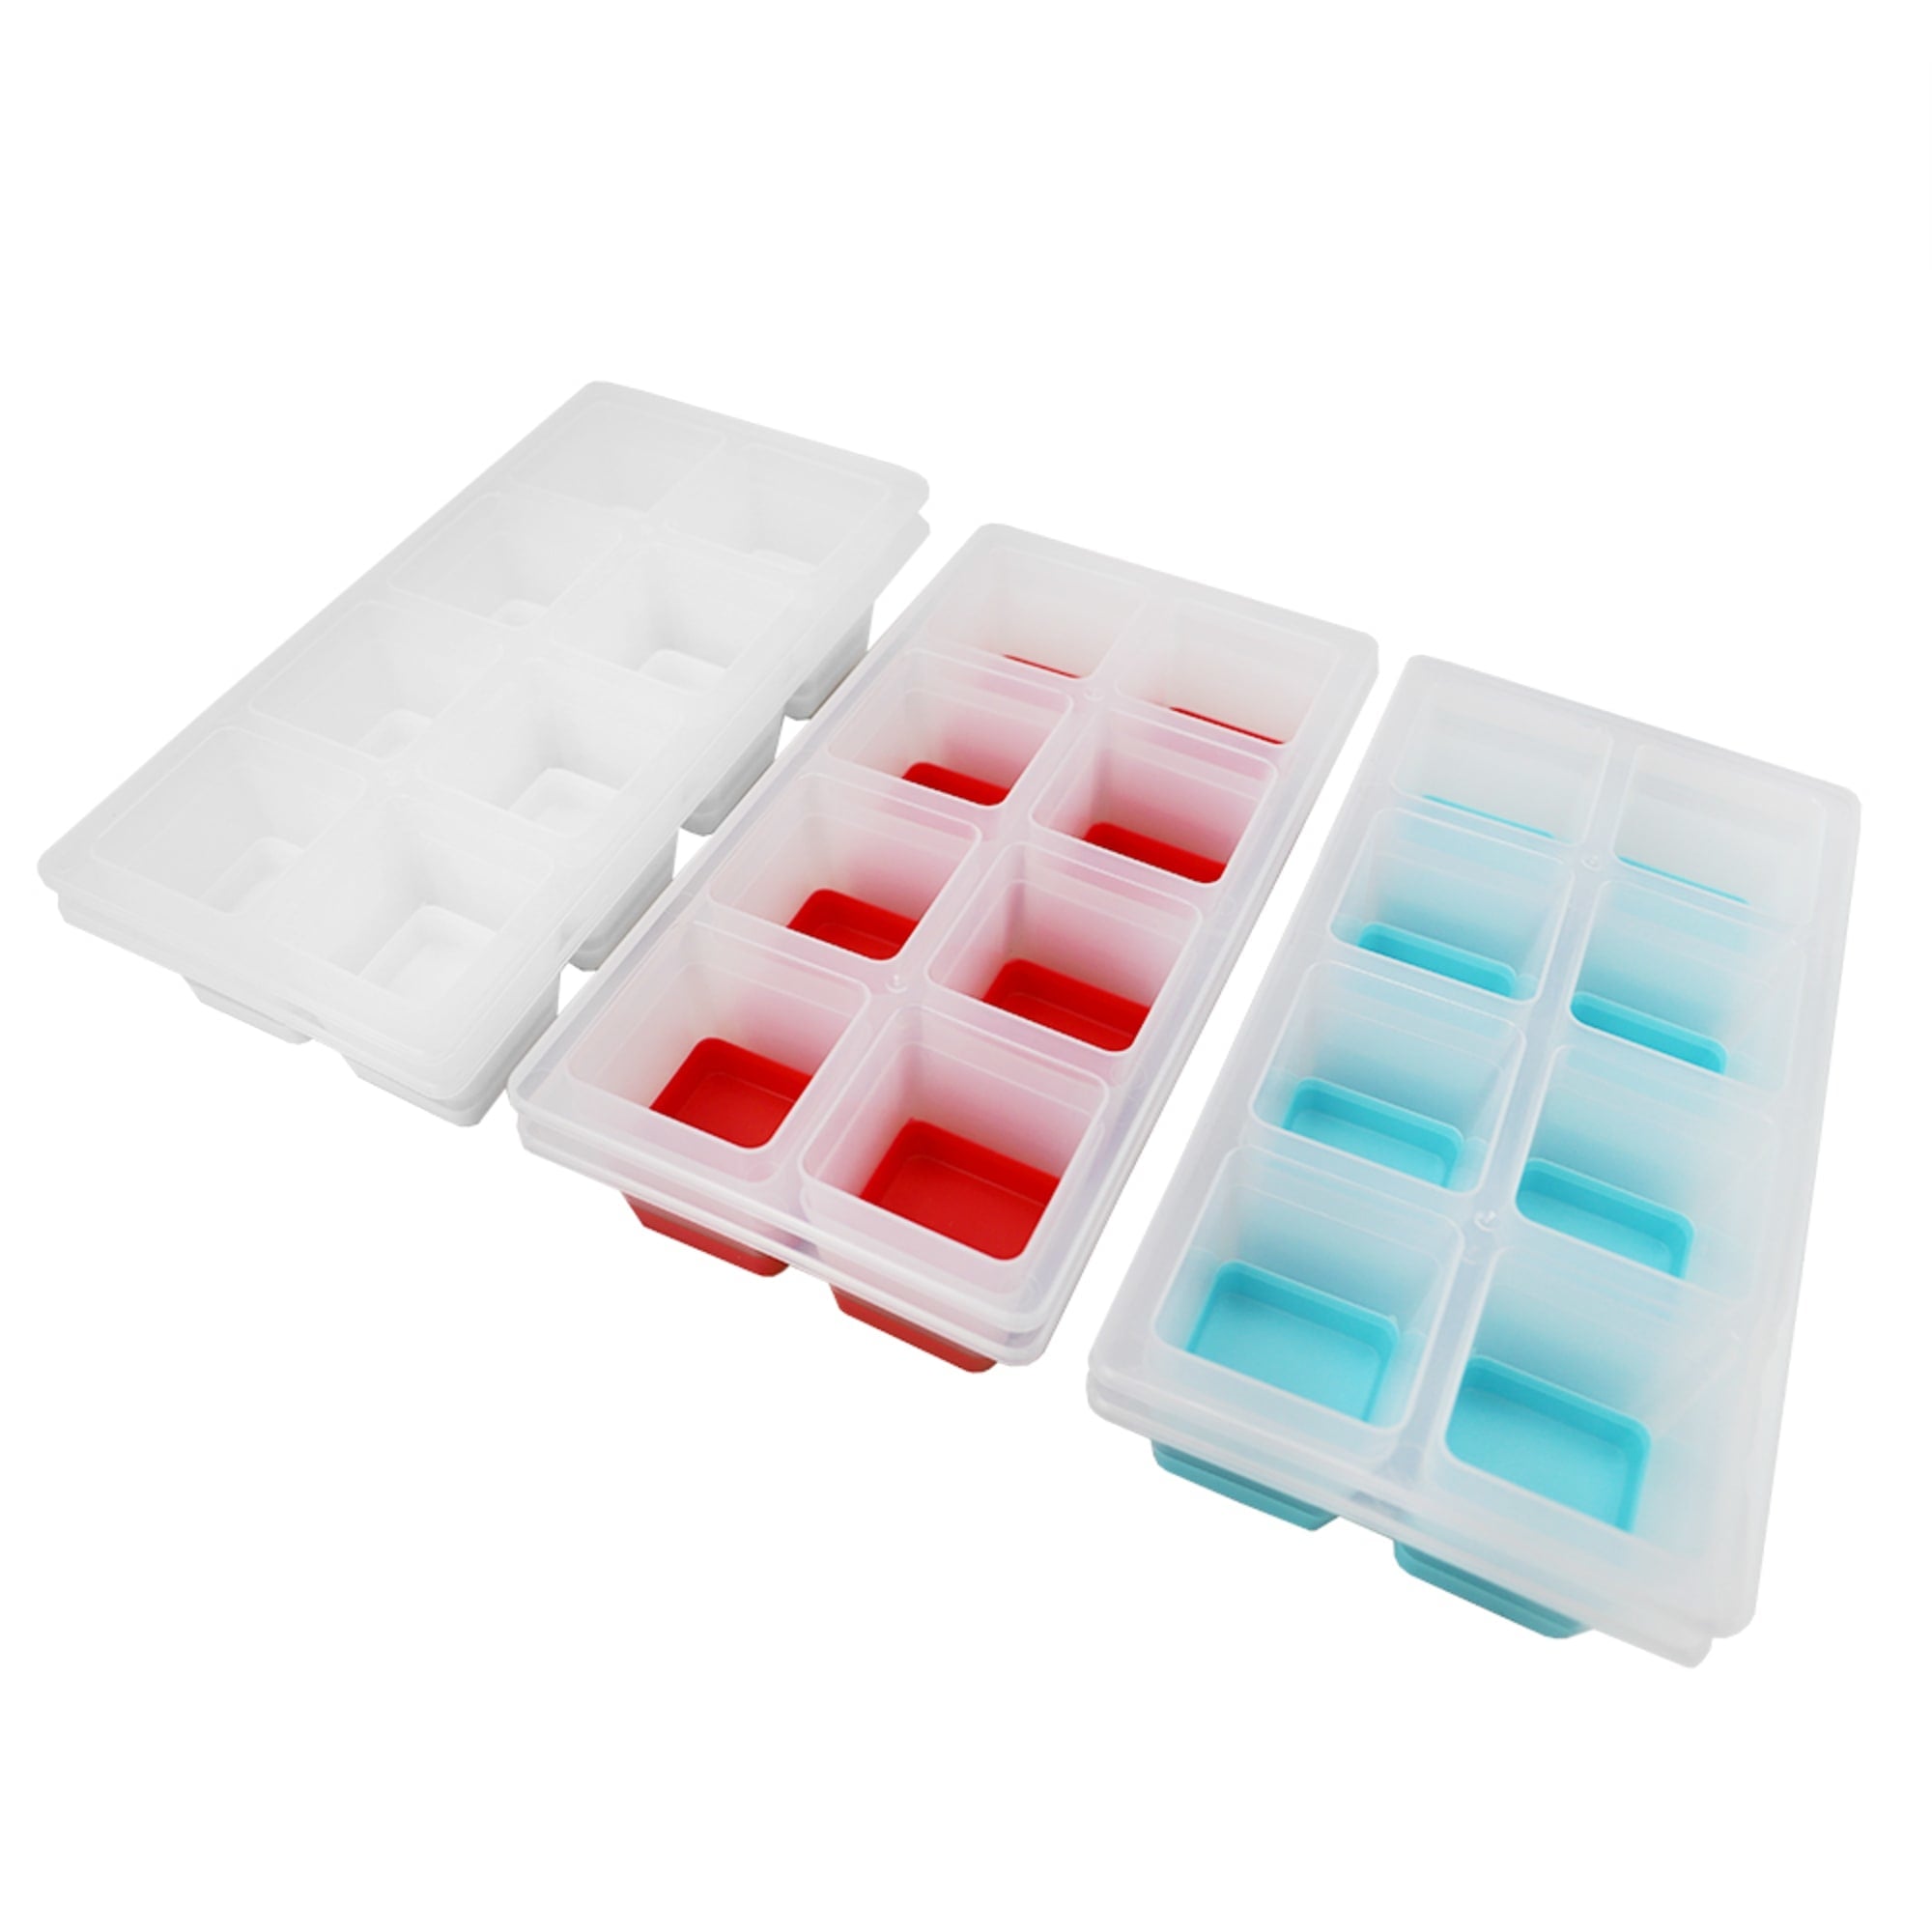 Handy Housewares 2 Jumbo Silicone Push Ice Cube Tray - Makes 8